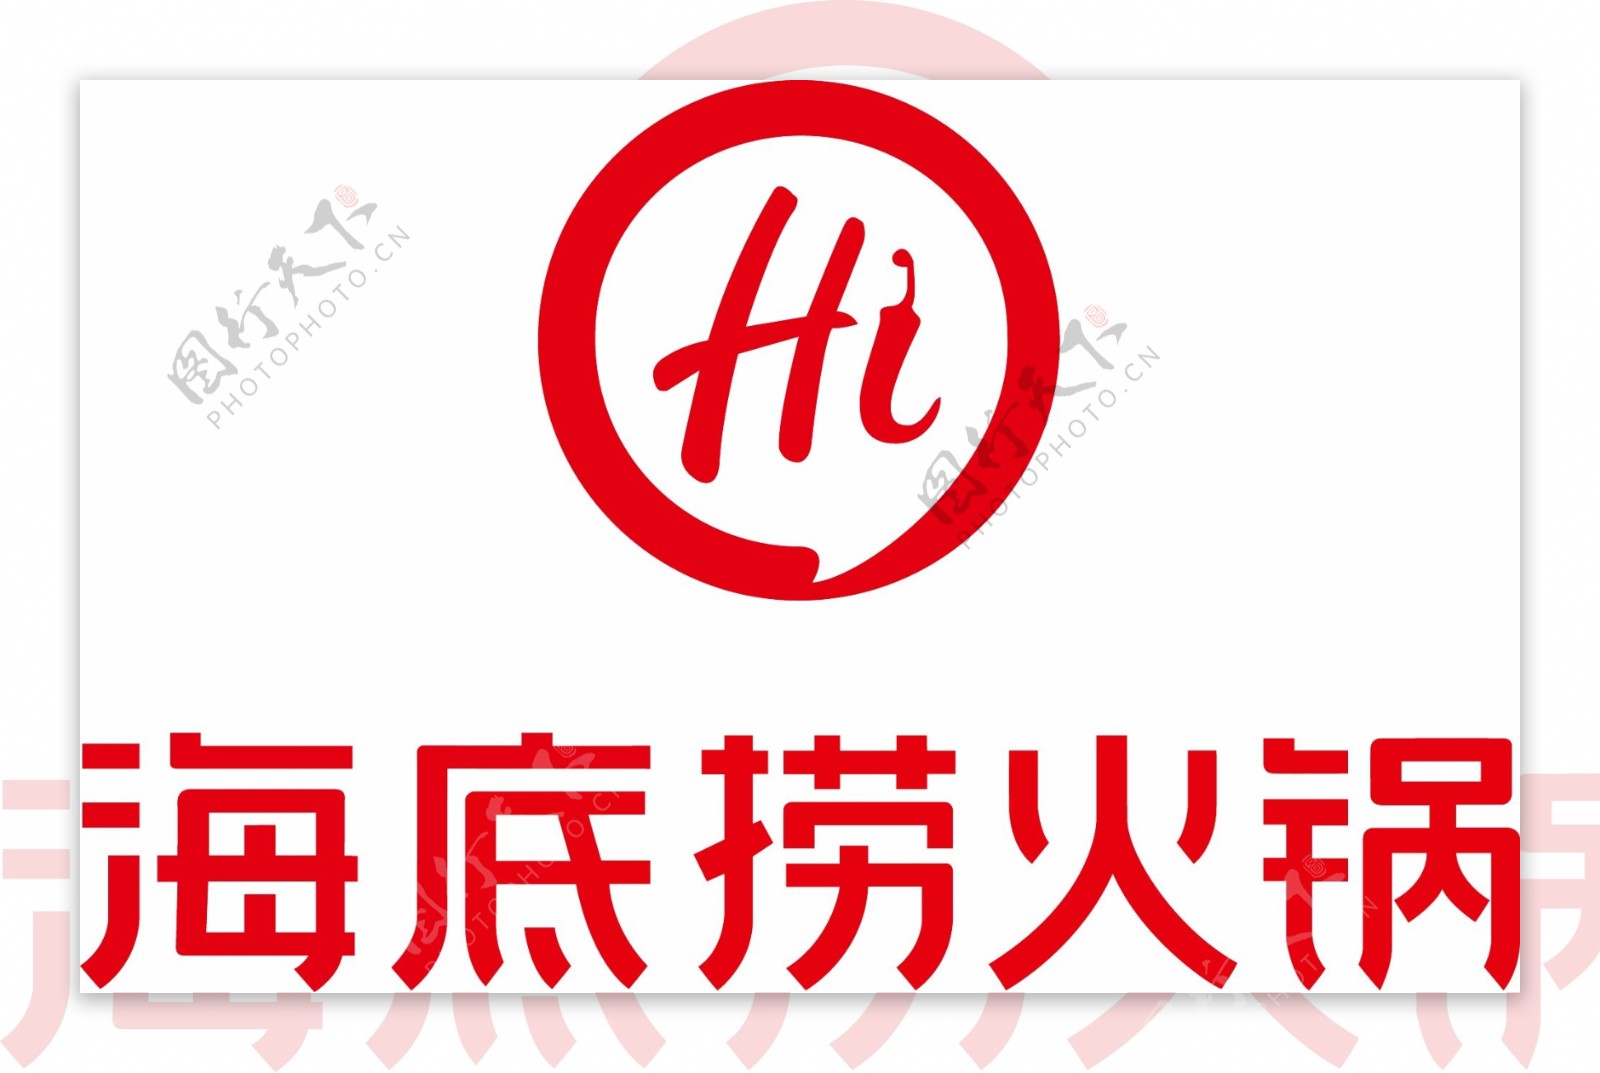 新版海底捞火锅logo源文件